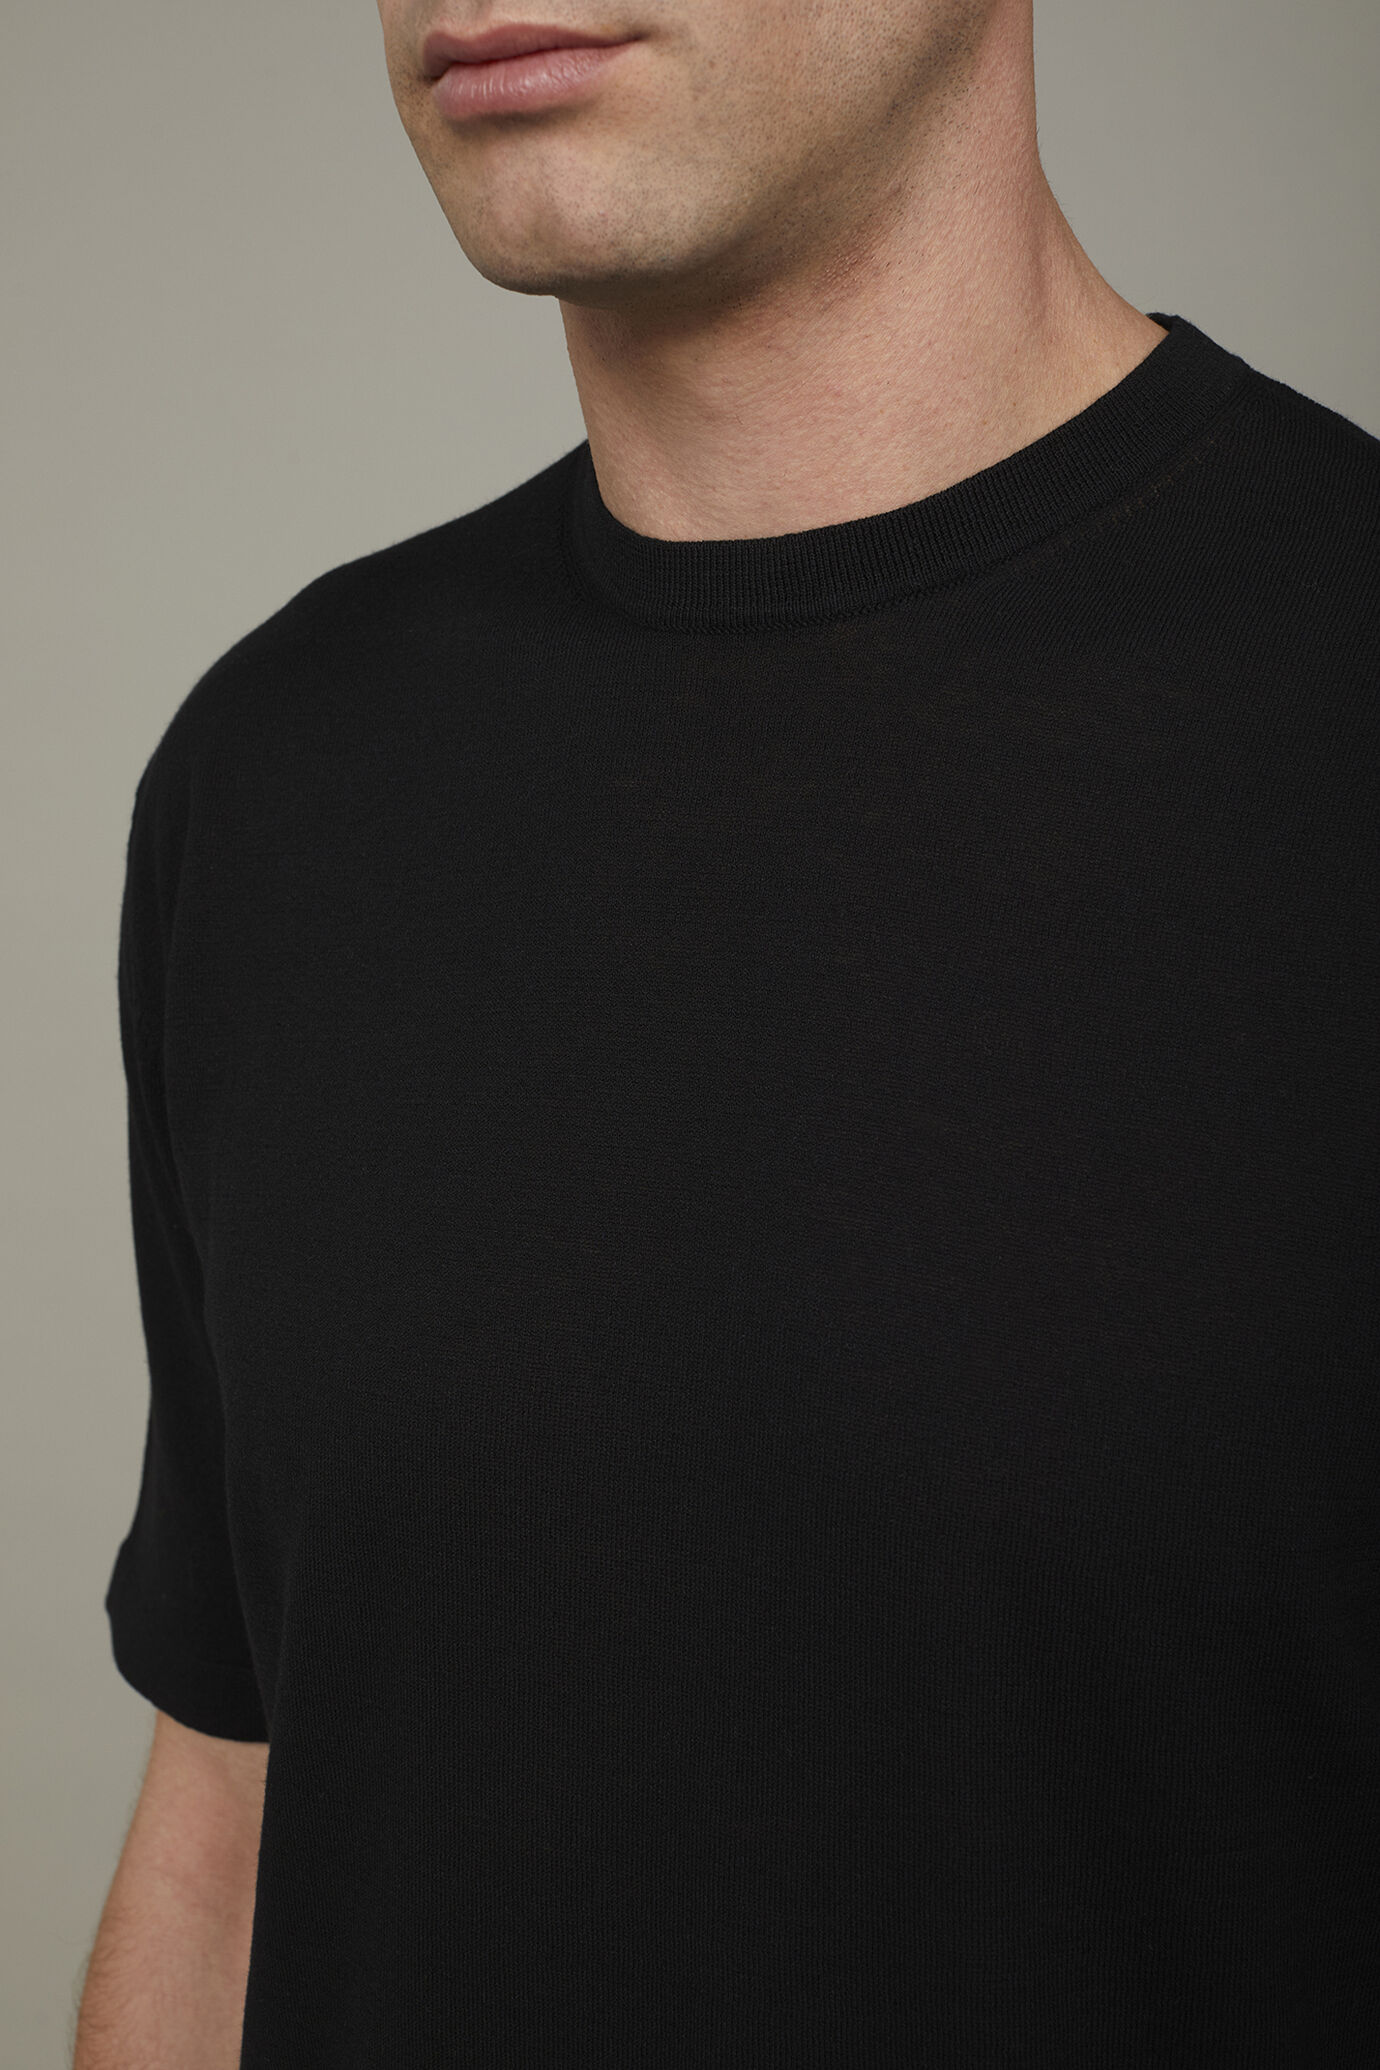 Men's knitted t-shirt 100% cotton short-sleeved regular fit image number 3